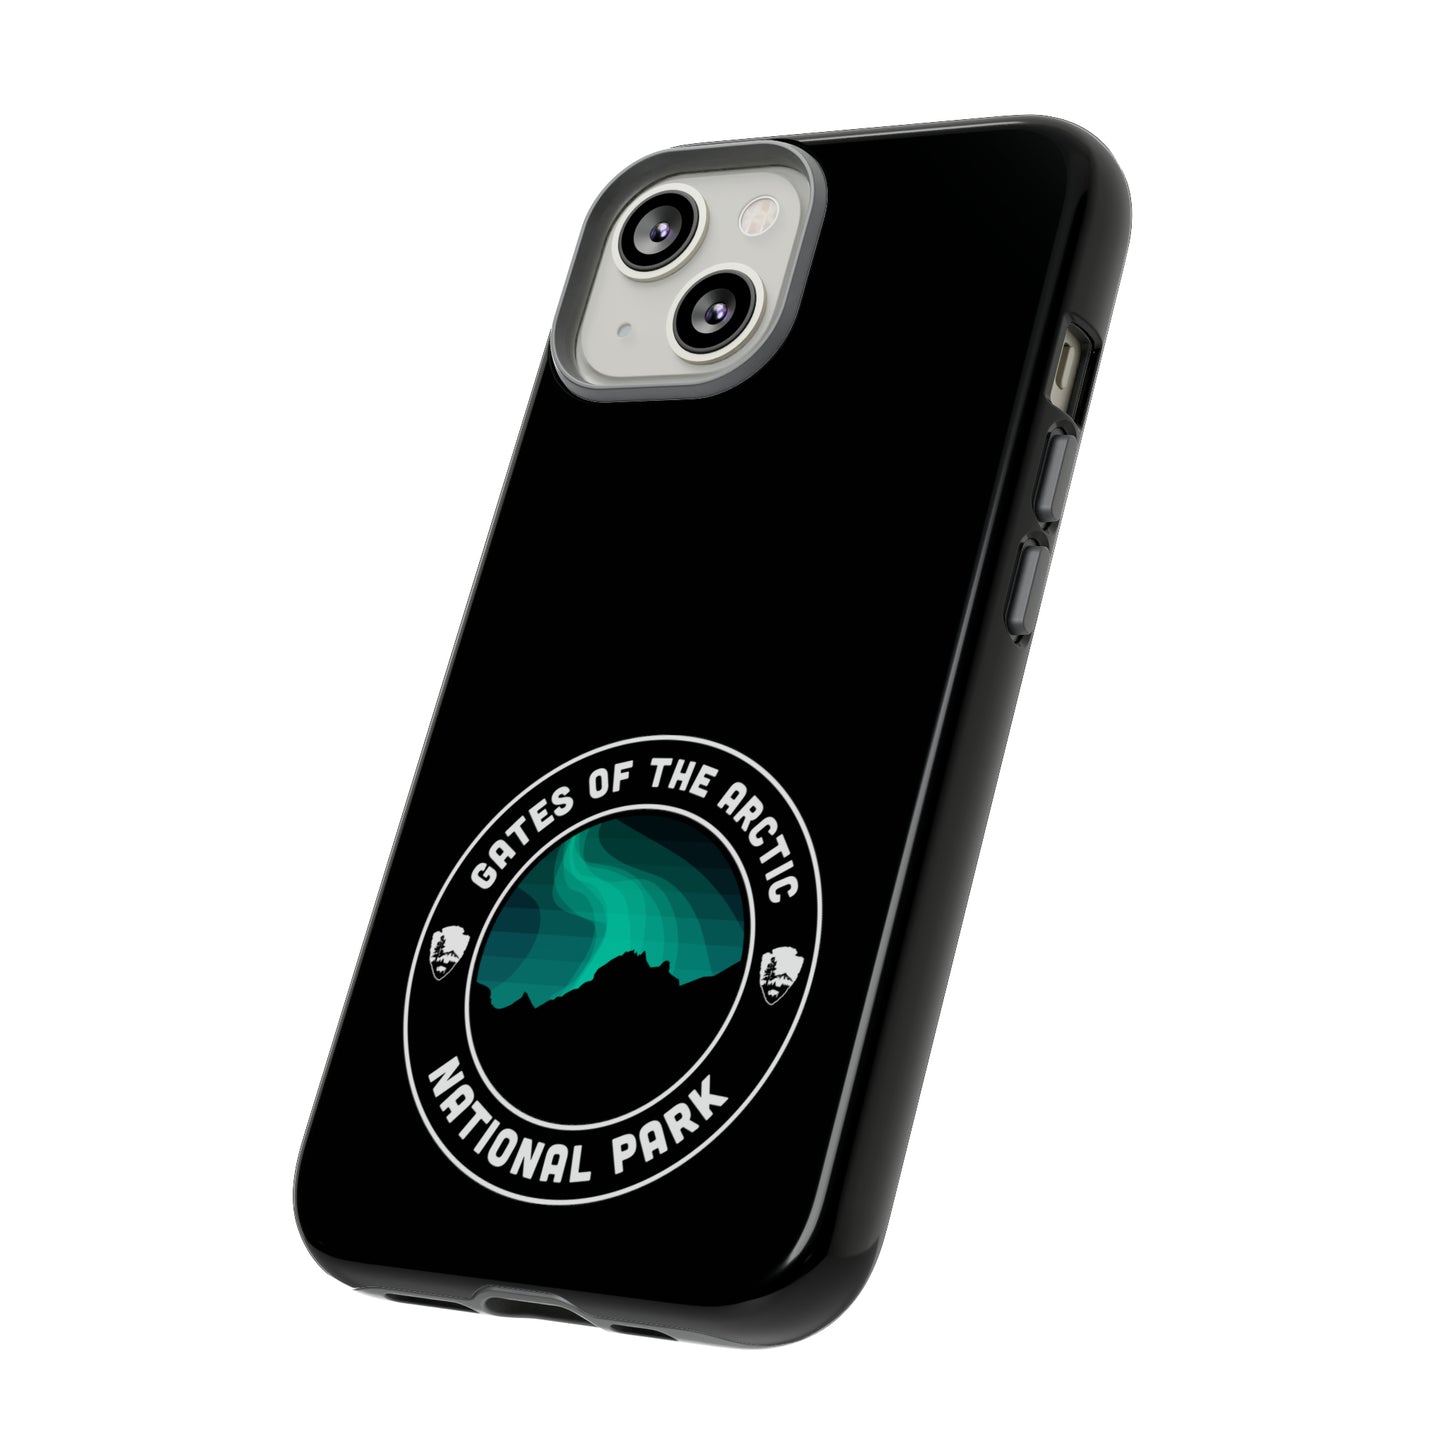 Gates of the Arctic National Park Phone Case - Round Emblem Design